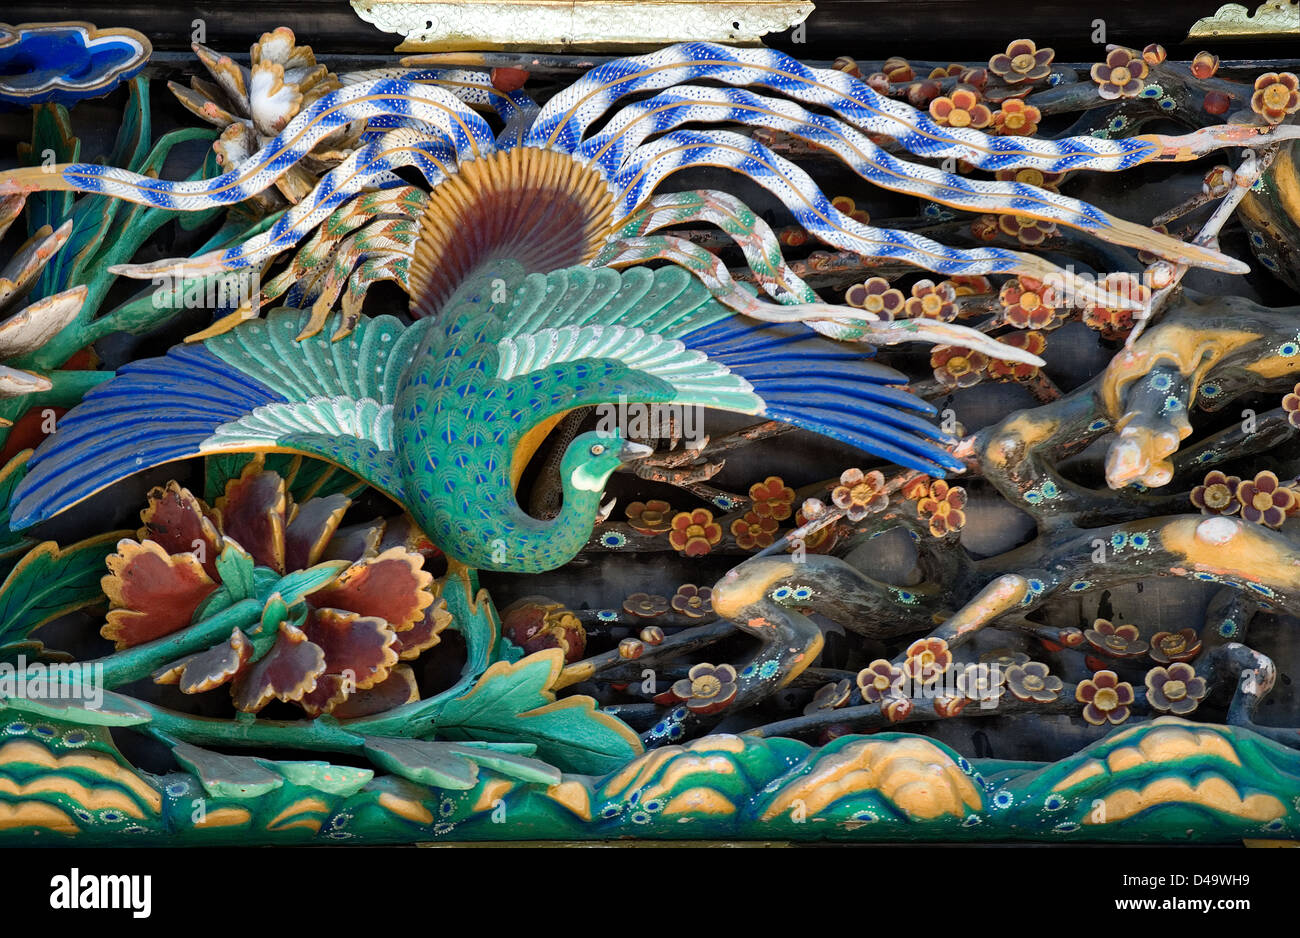 Detalle de relieve arquitectónico arte ornamental de paneles de escenas de la naturaleza en la pared del edificio Kairo Tozai al templo Toshogu, Nikko Foto de stock